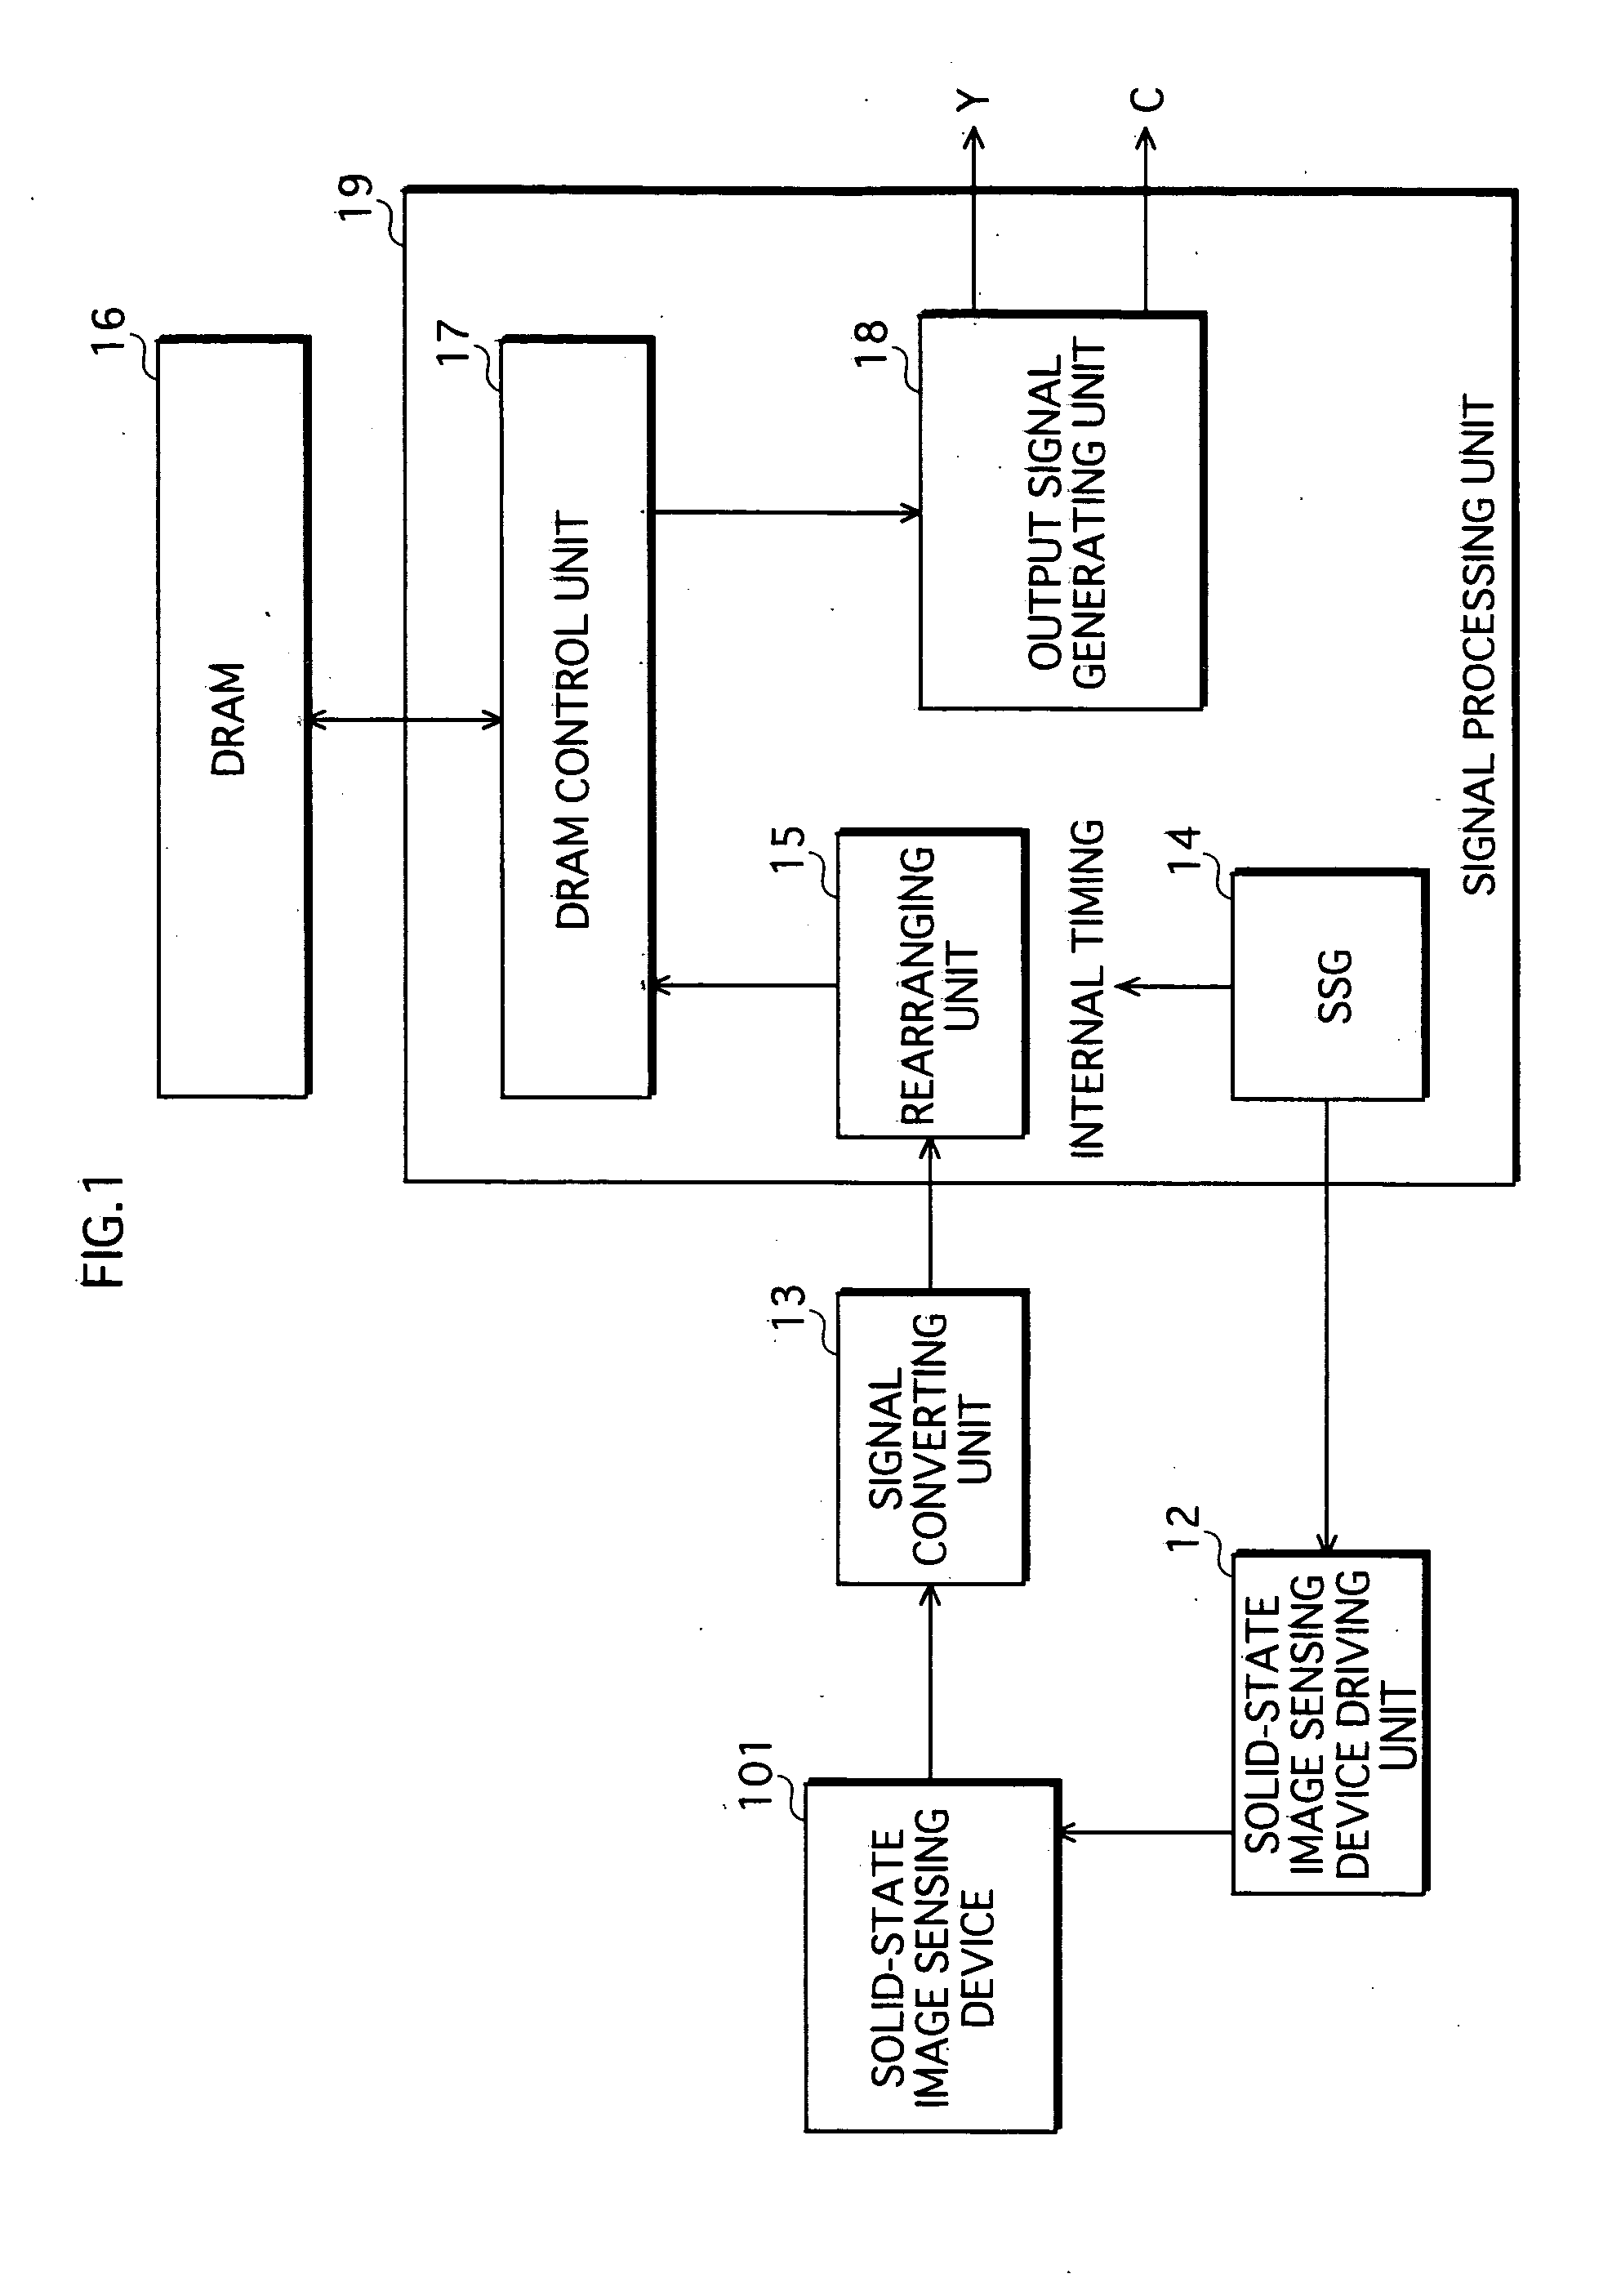 Pixel arranging apparatus, solid-state image sensing apparatus,and camera